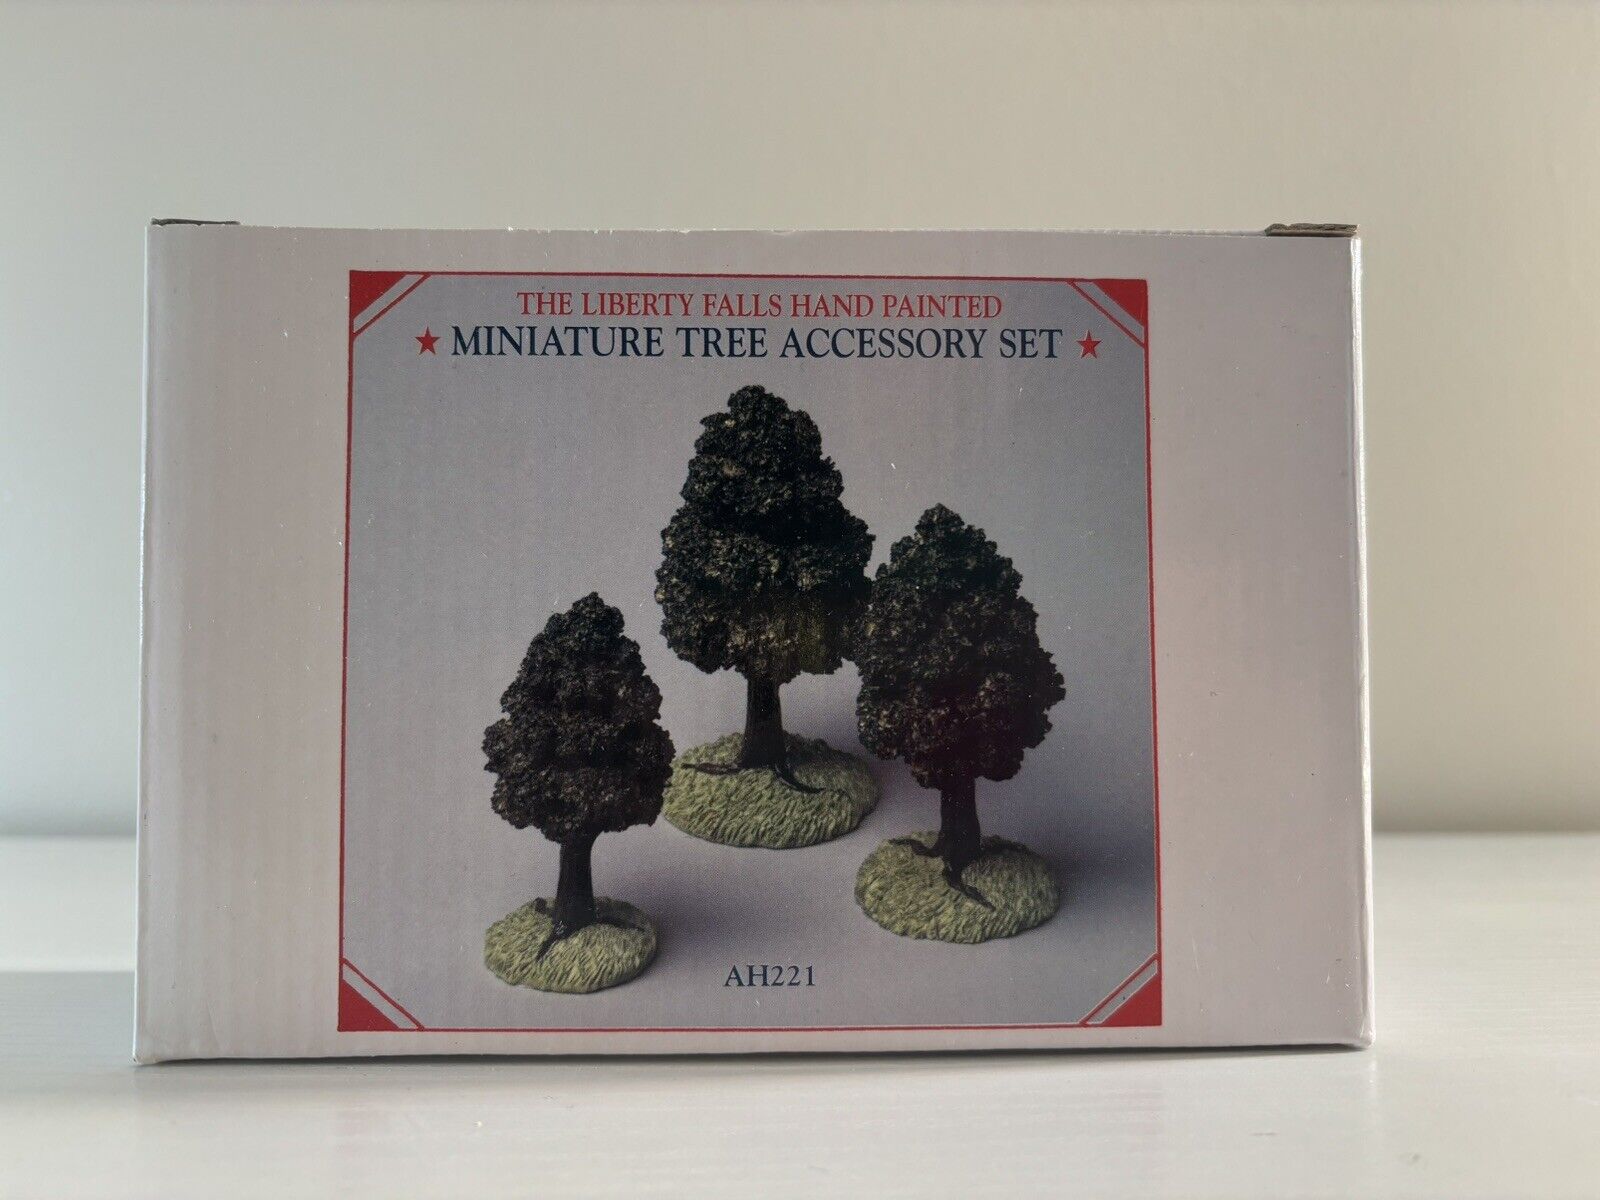 The Liberty Falls Hand Painted Miniature Tree Accessory Set AH221.